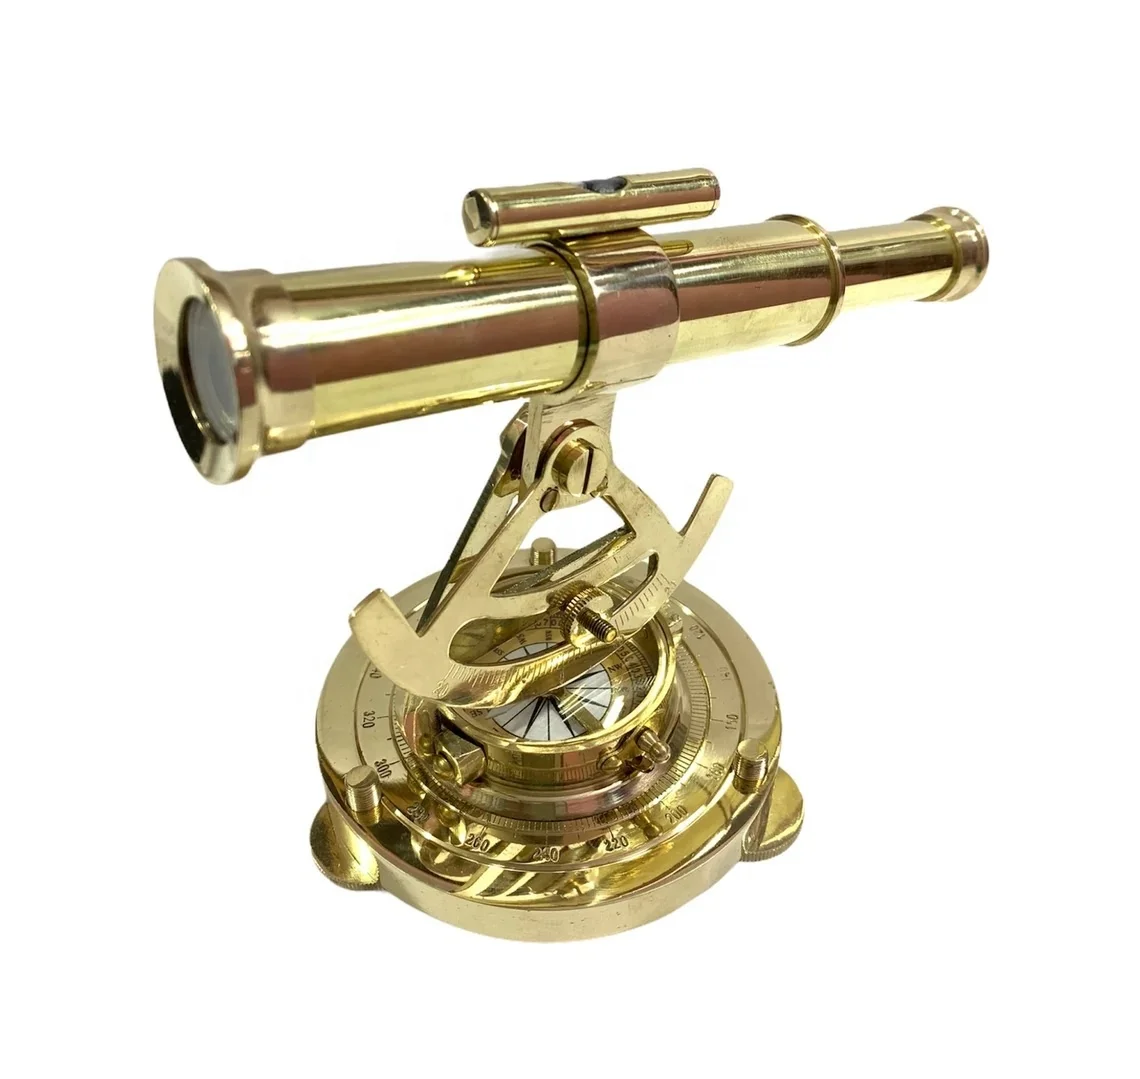 Vintage Compass Survey Instrument Brass Theodolite Ali dade Transit Telescope 